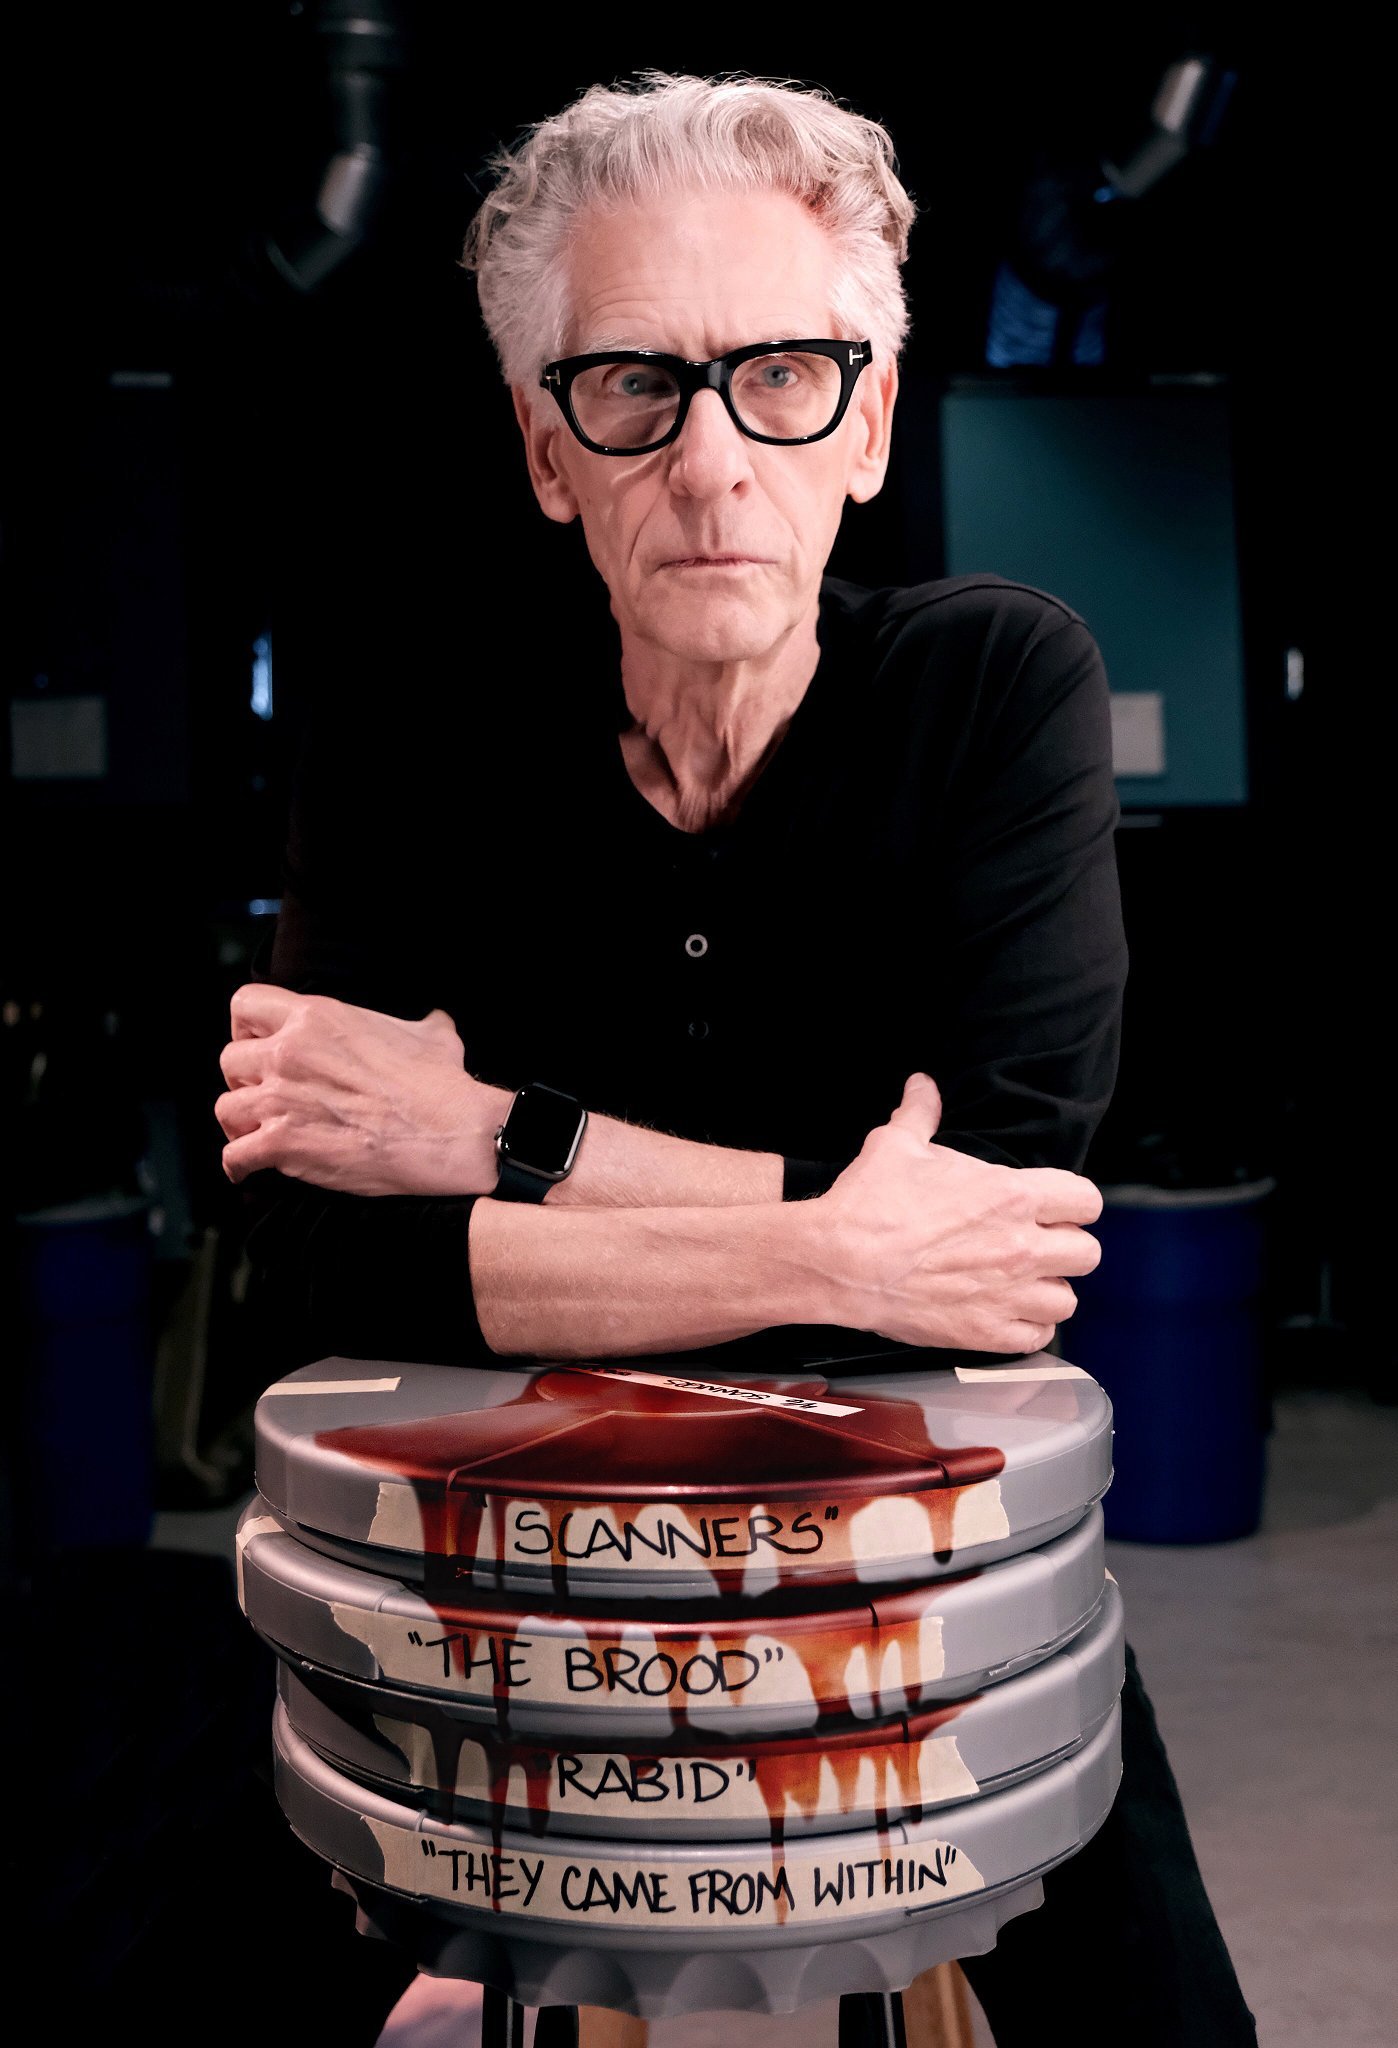 Happy birthday to the King of Kings, David Cronenberg 